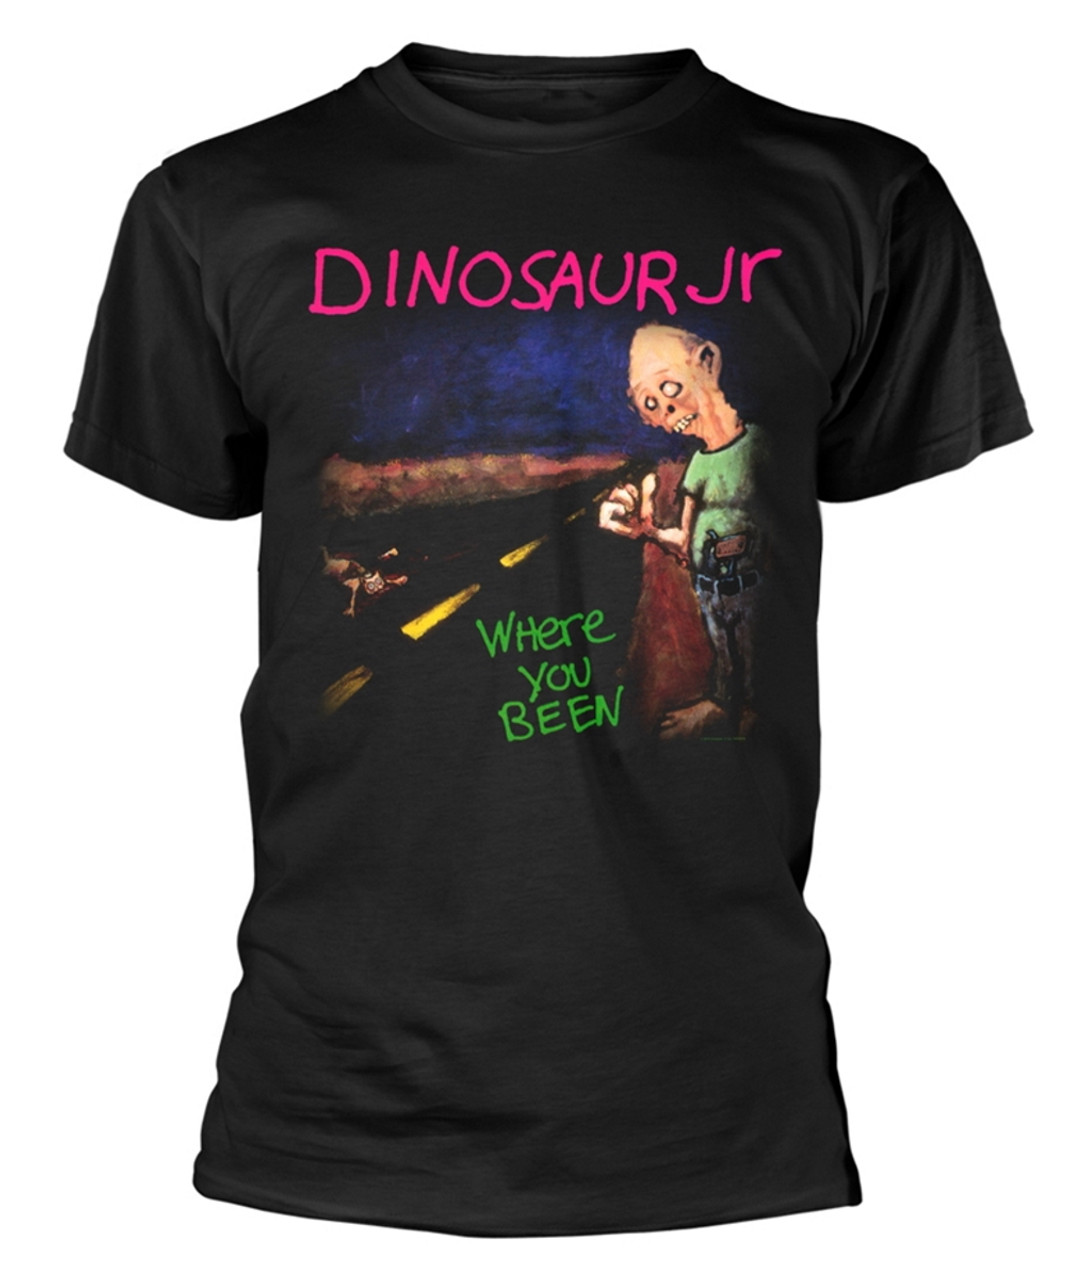 Dinosaur Jr. 'Where You Been' (Black) T-Shirt